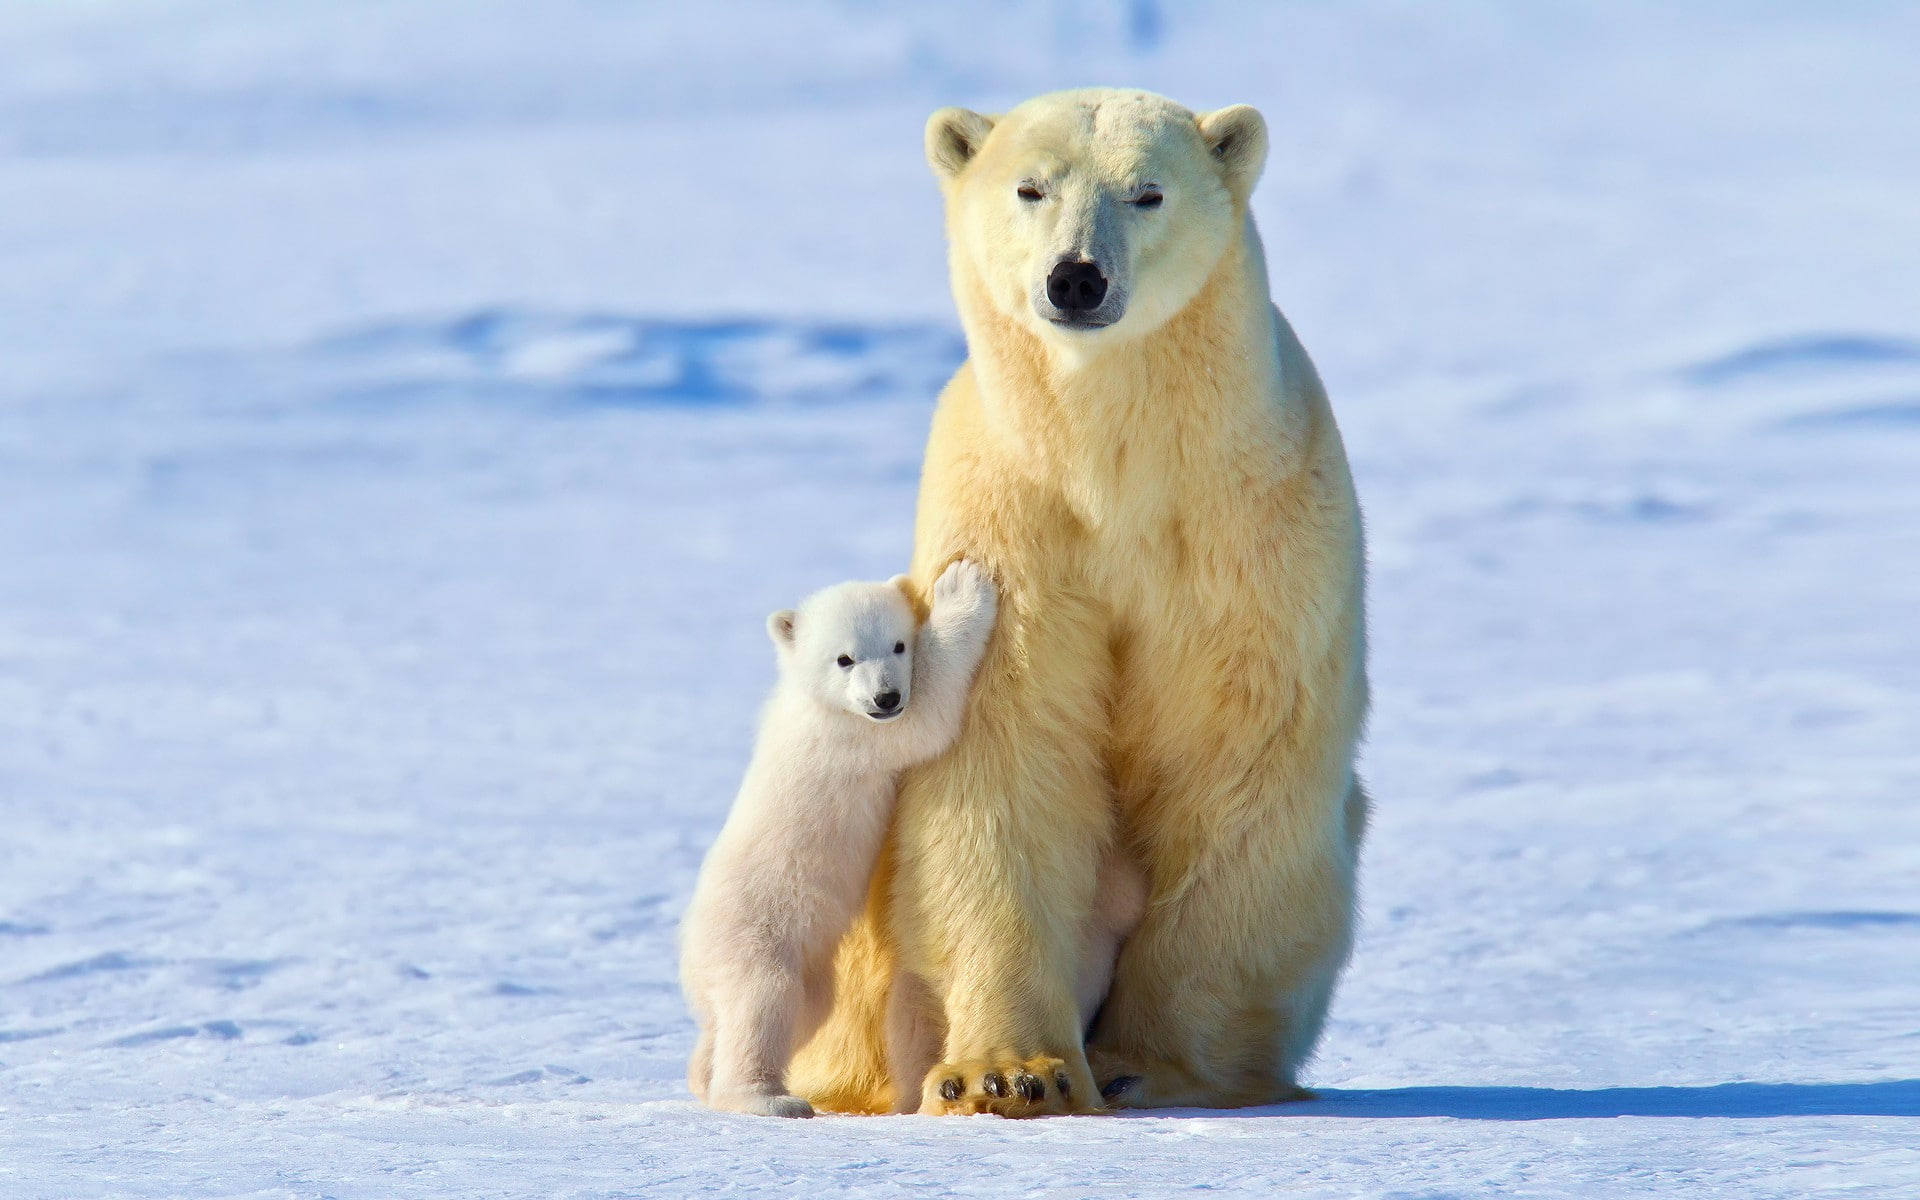 White bear, baby polar bears, winter, snow, light